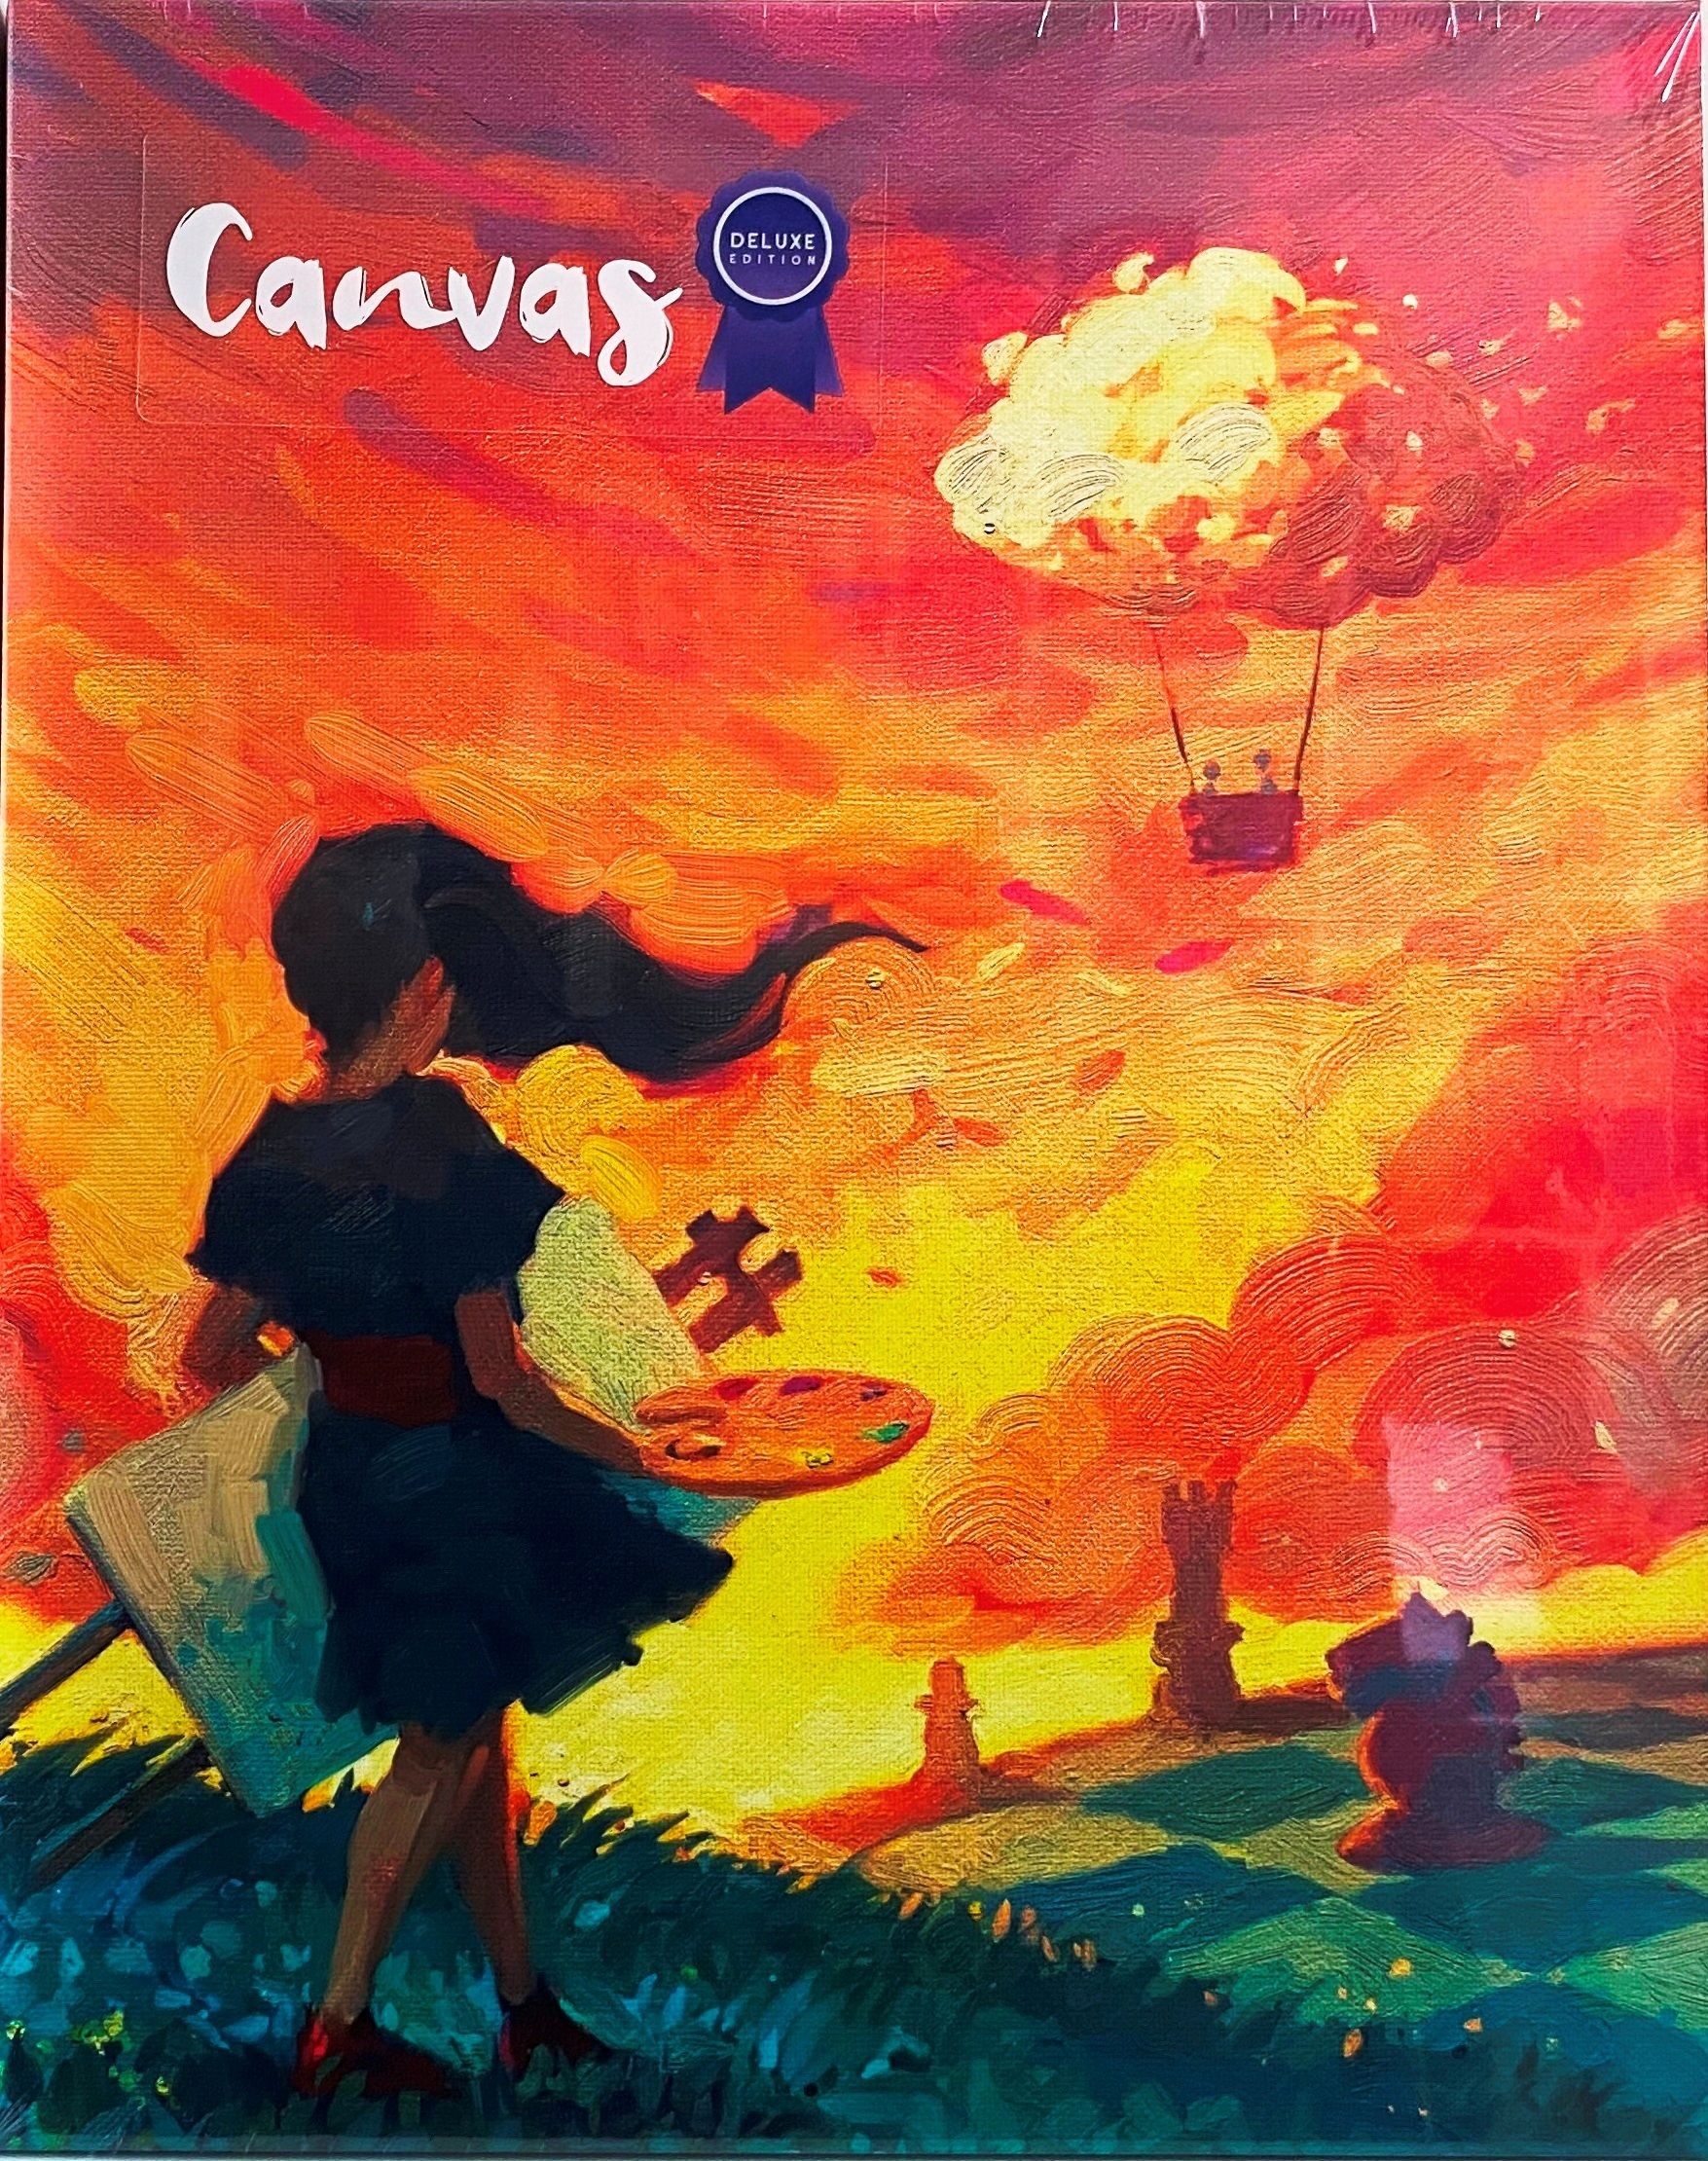 Canvas (Kickstarter Standard Edition) + Reflections Expansion